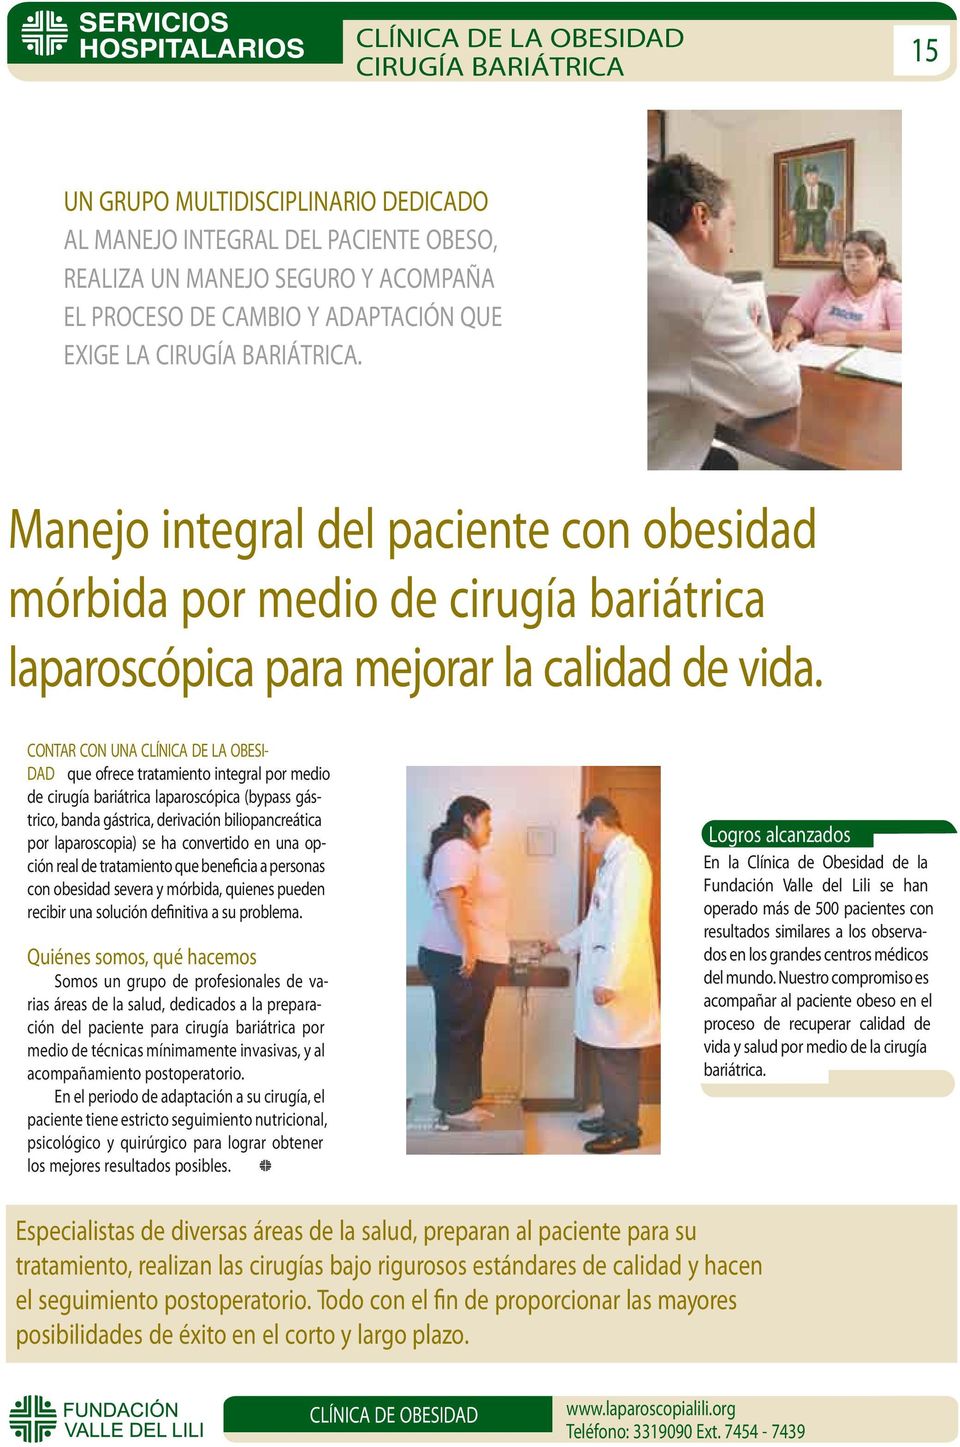 CONTAR CON UNA CLÍNICA DE LA OBESI- DAD que ofrece tratamiento integral por medio de cirugía bariátrica laparoscópica (bypass gástrico, banda gástrica, derivación biliopancreática por laparoscopia)